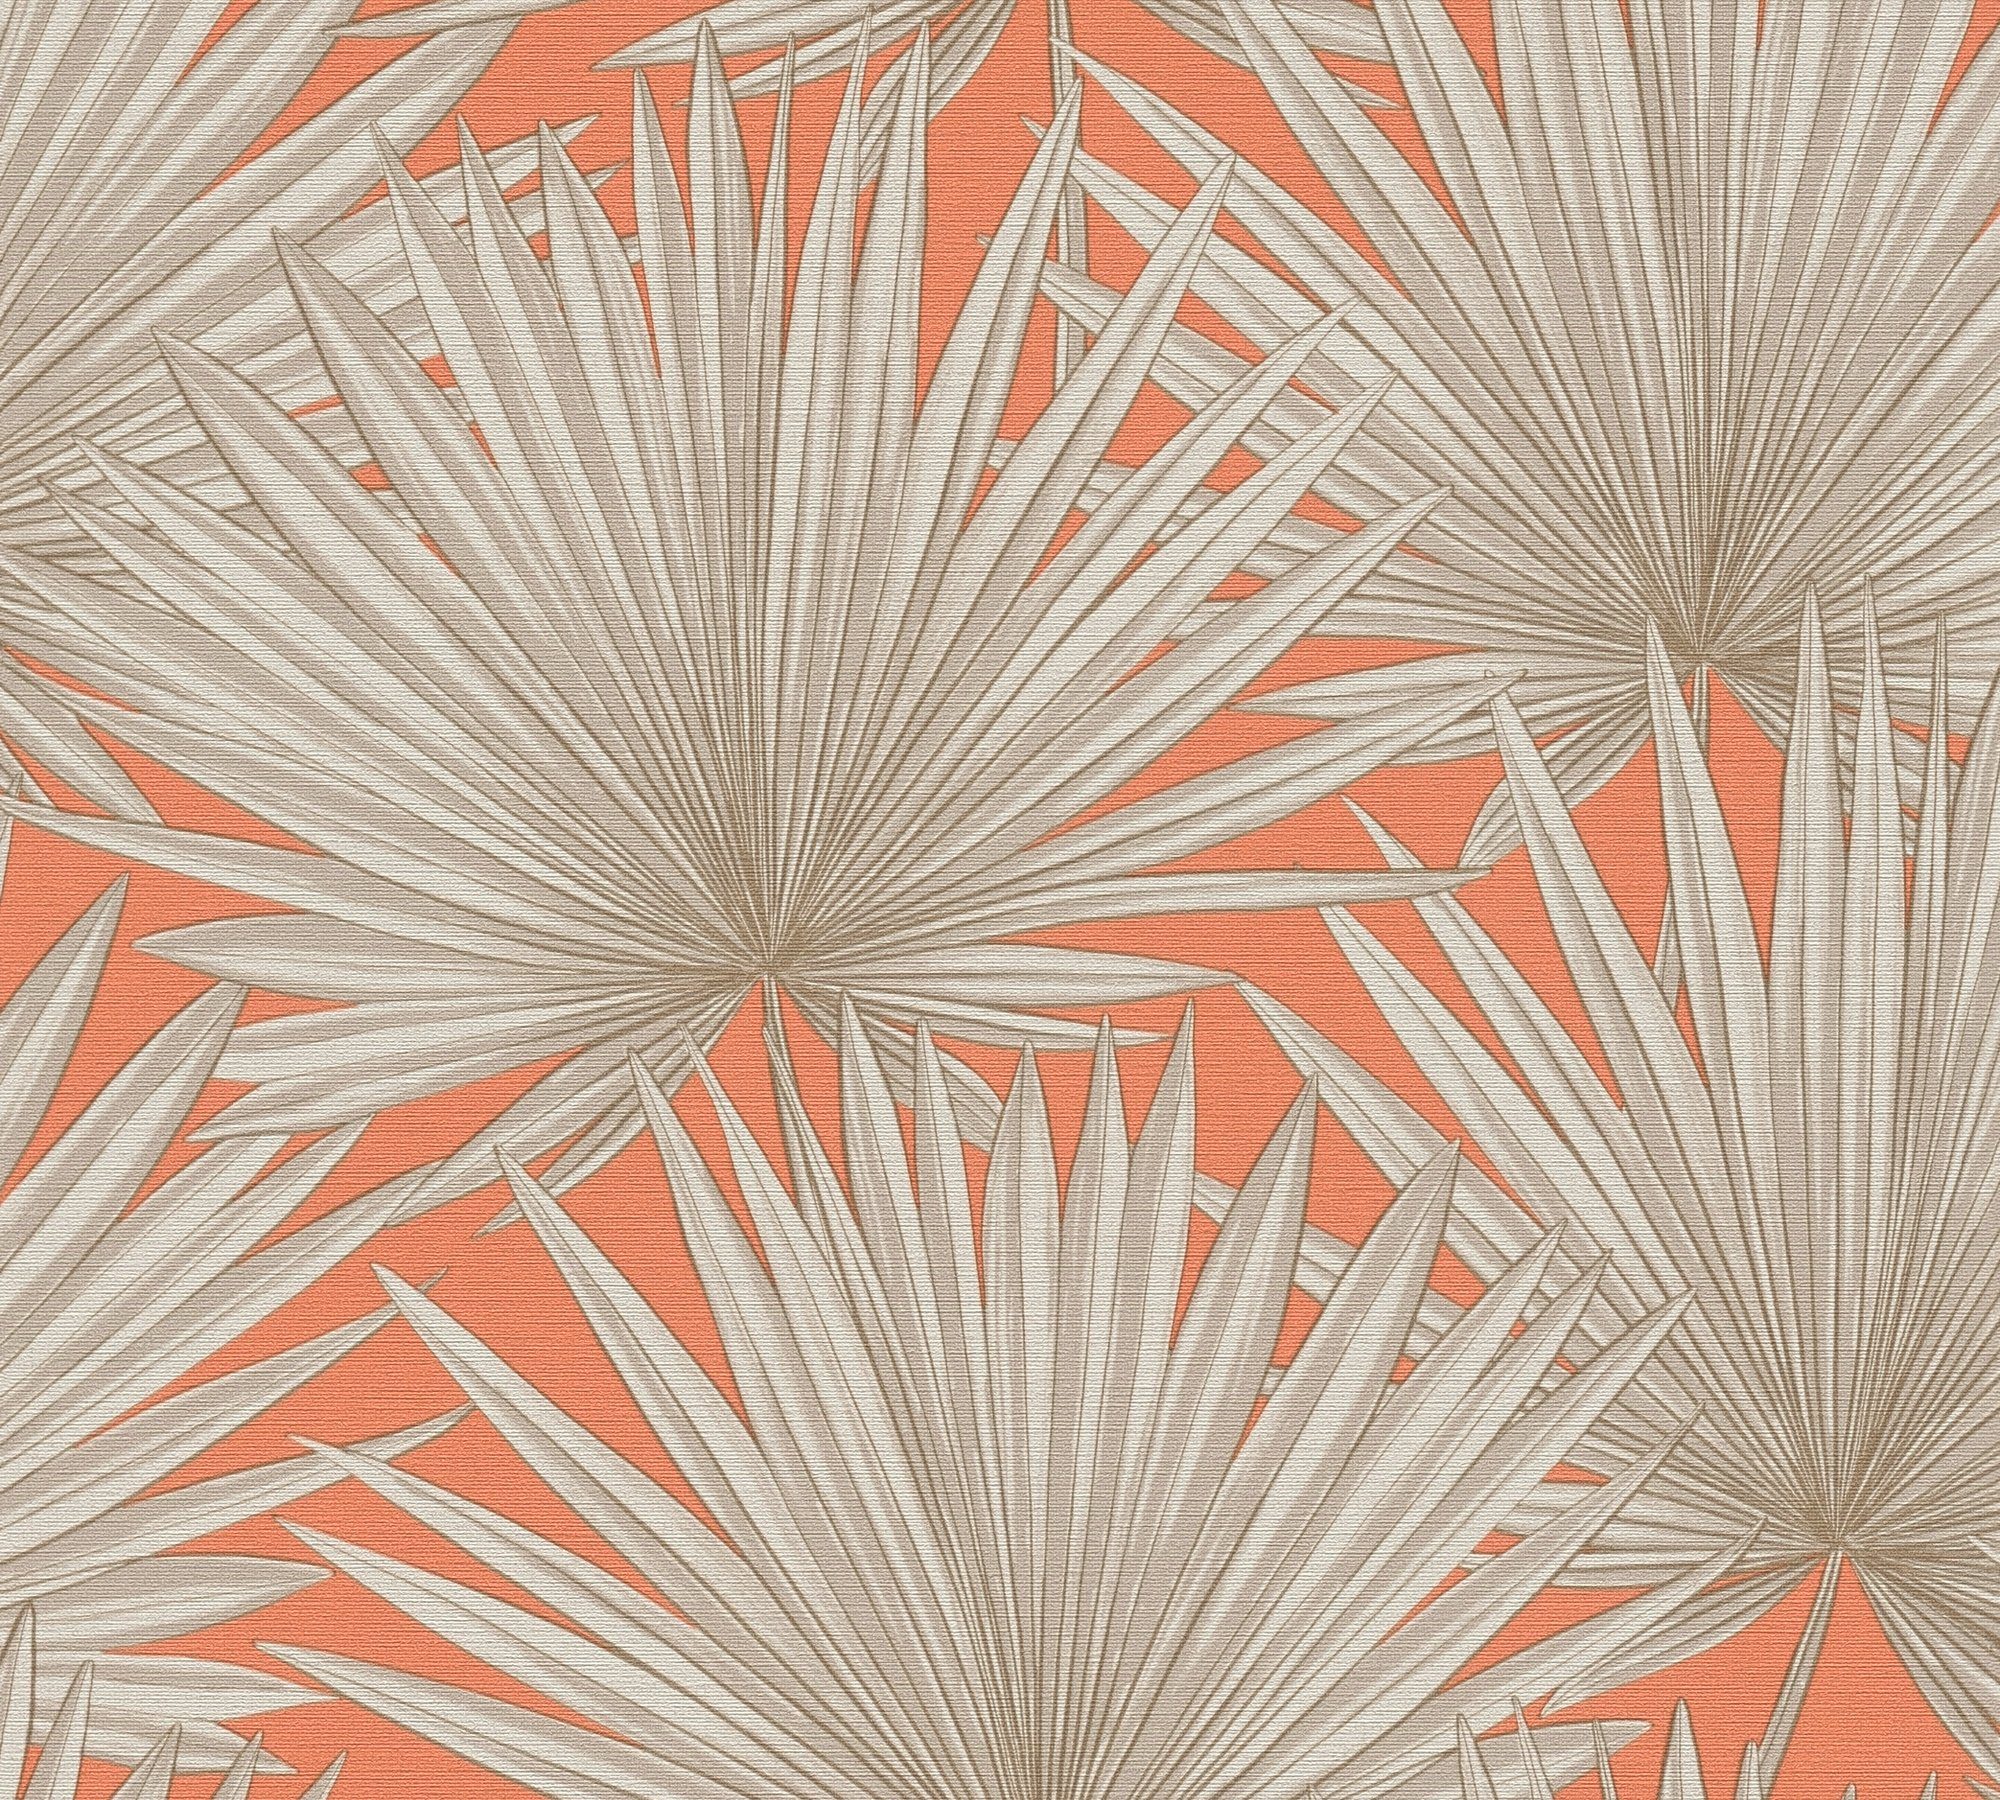 Antigua St), A.S. Floral Tapete matt, Tapete mit Palmenblätter, (1 geprägt, Vliestapete Création beige,natur,orange